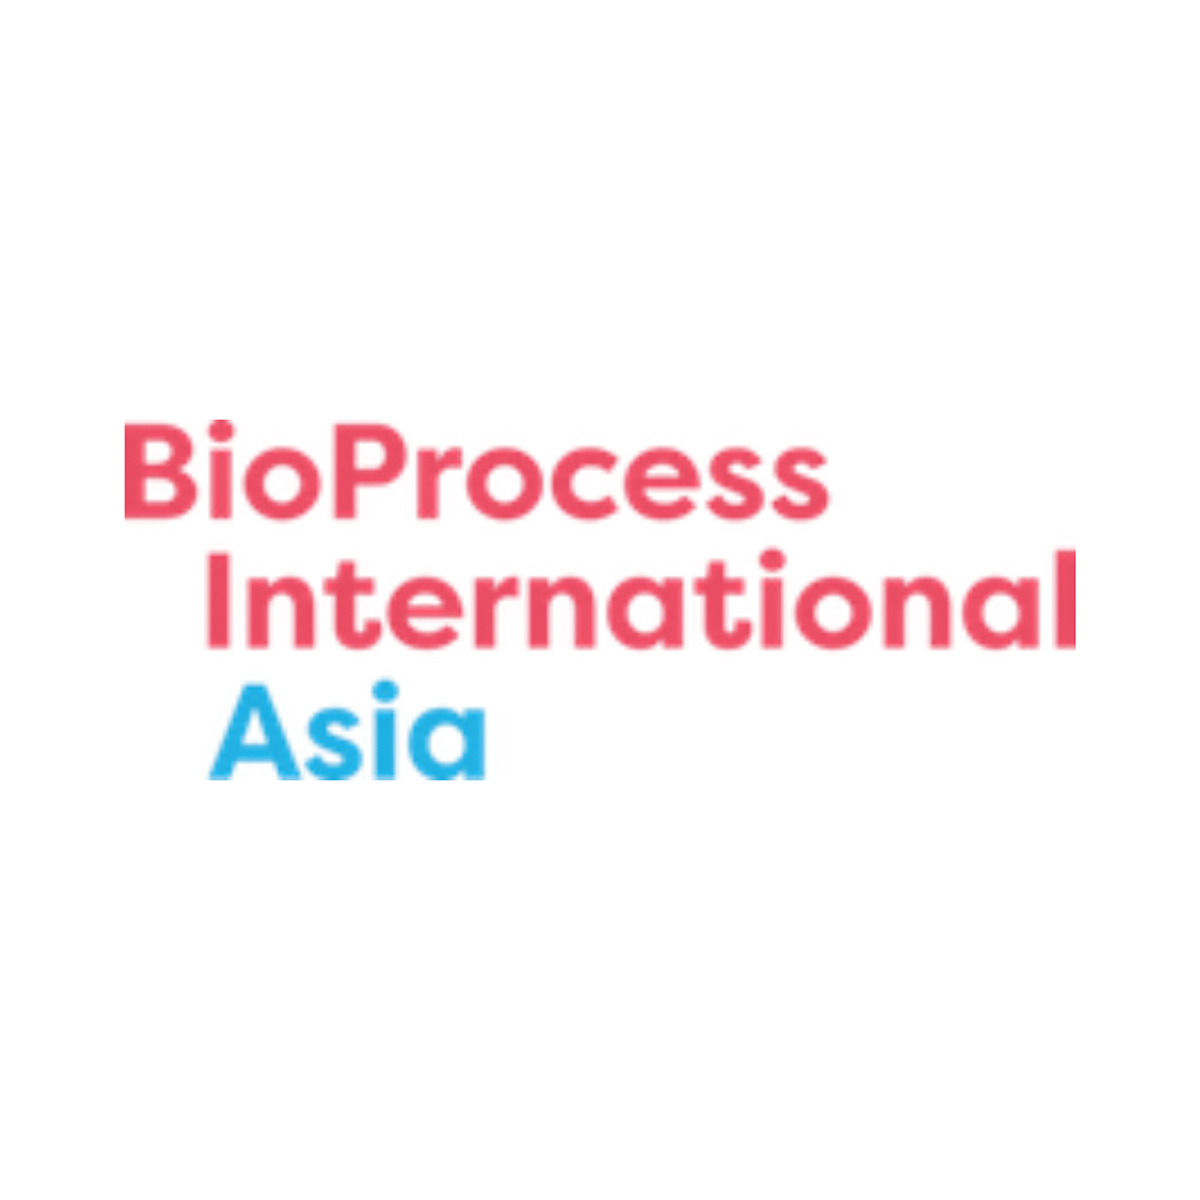 BioProcess International Asia